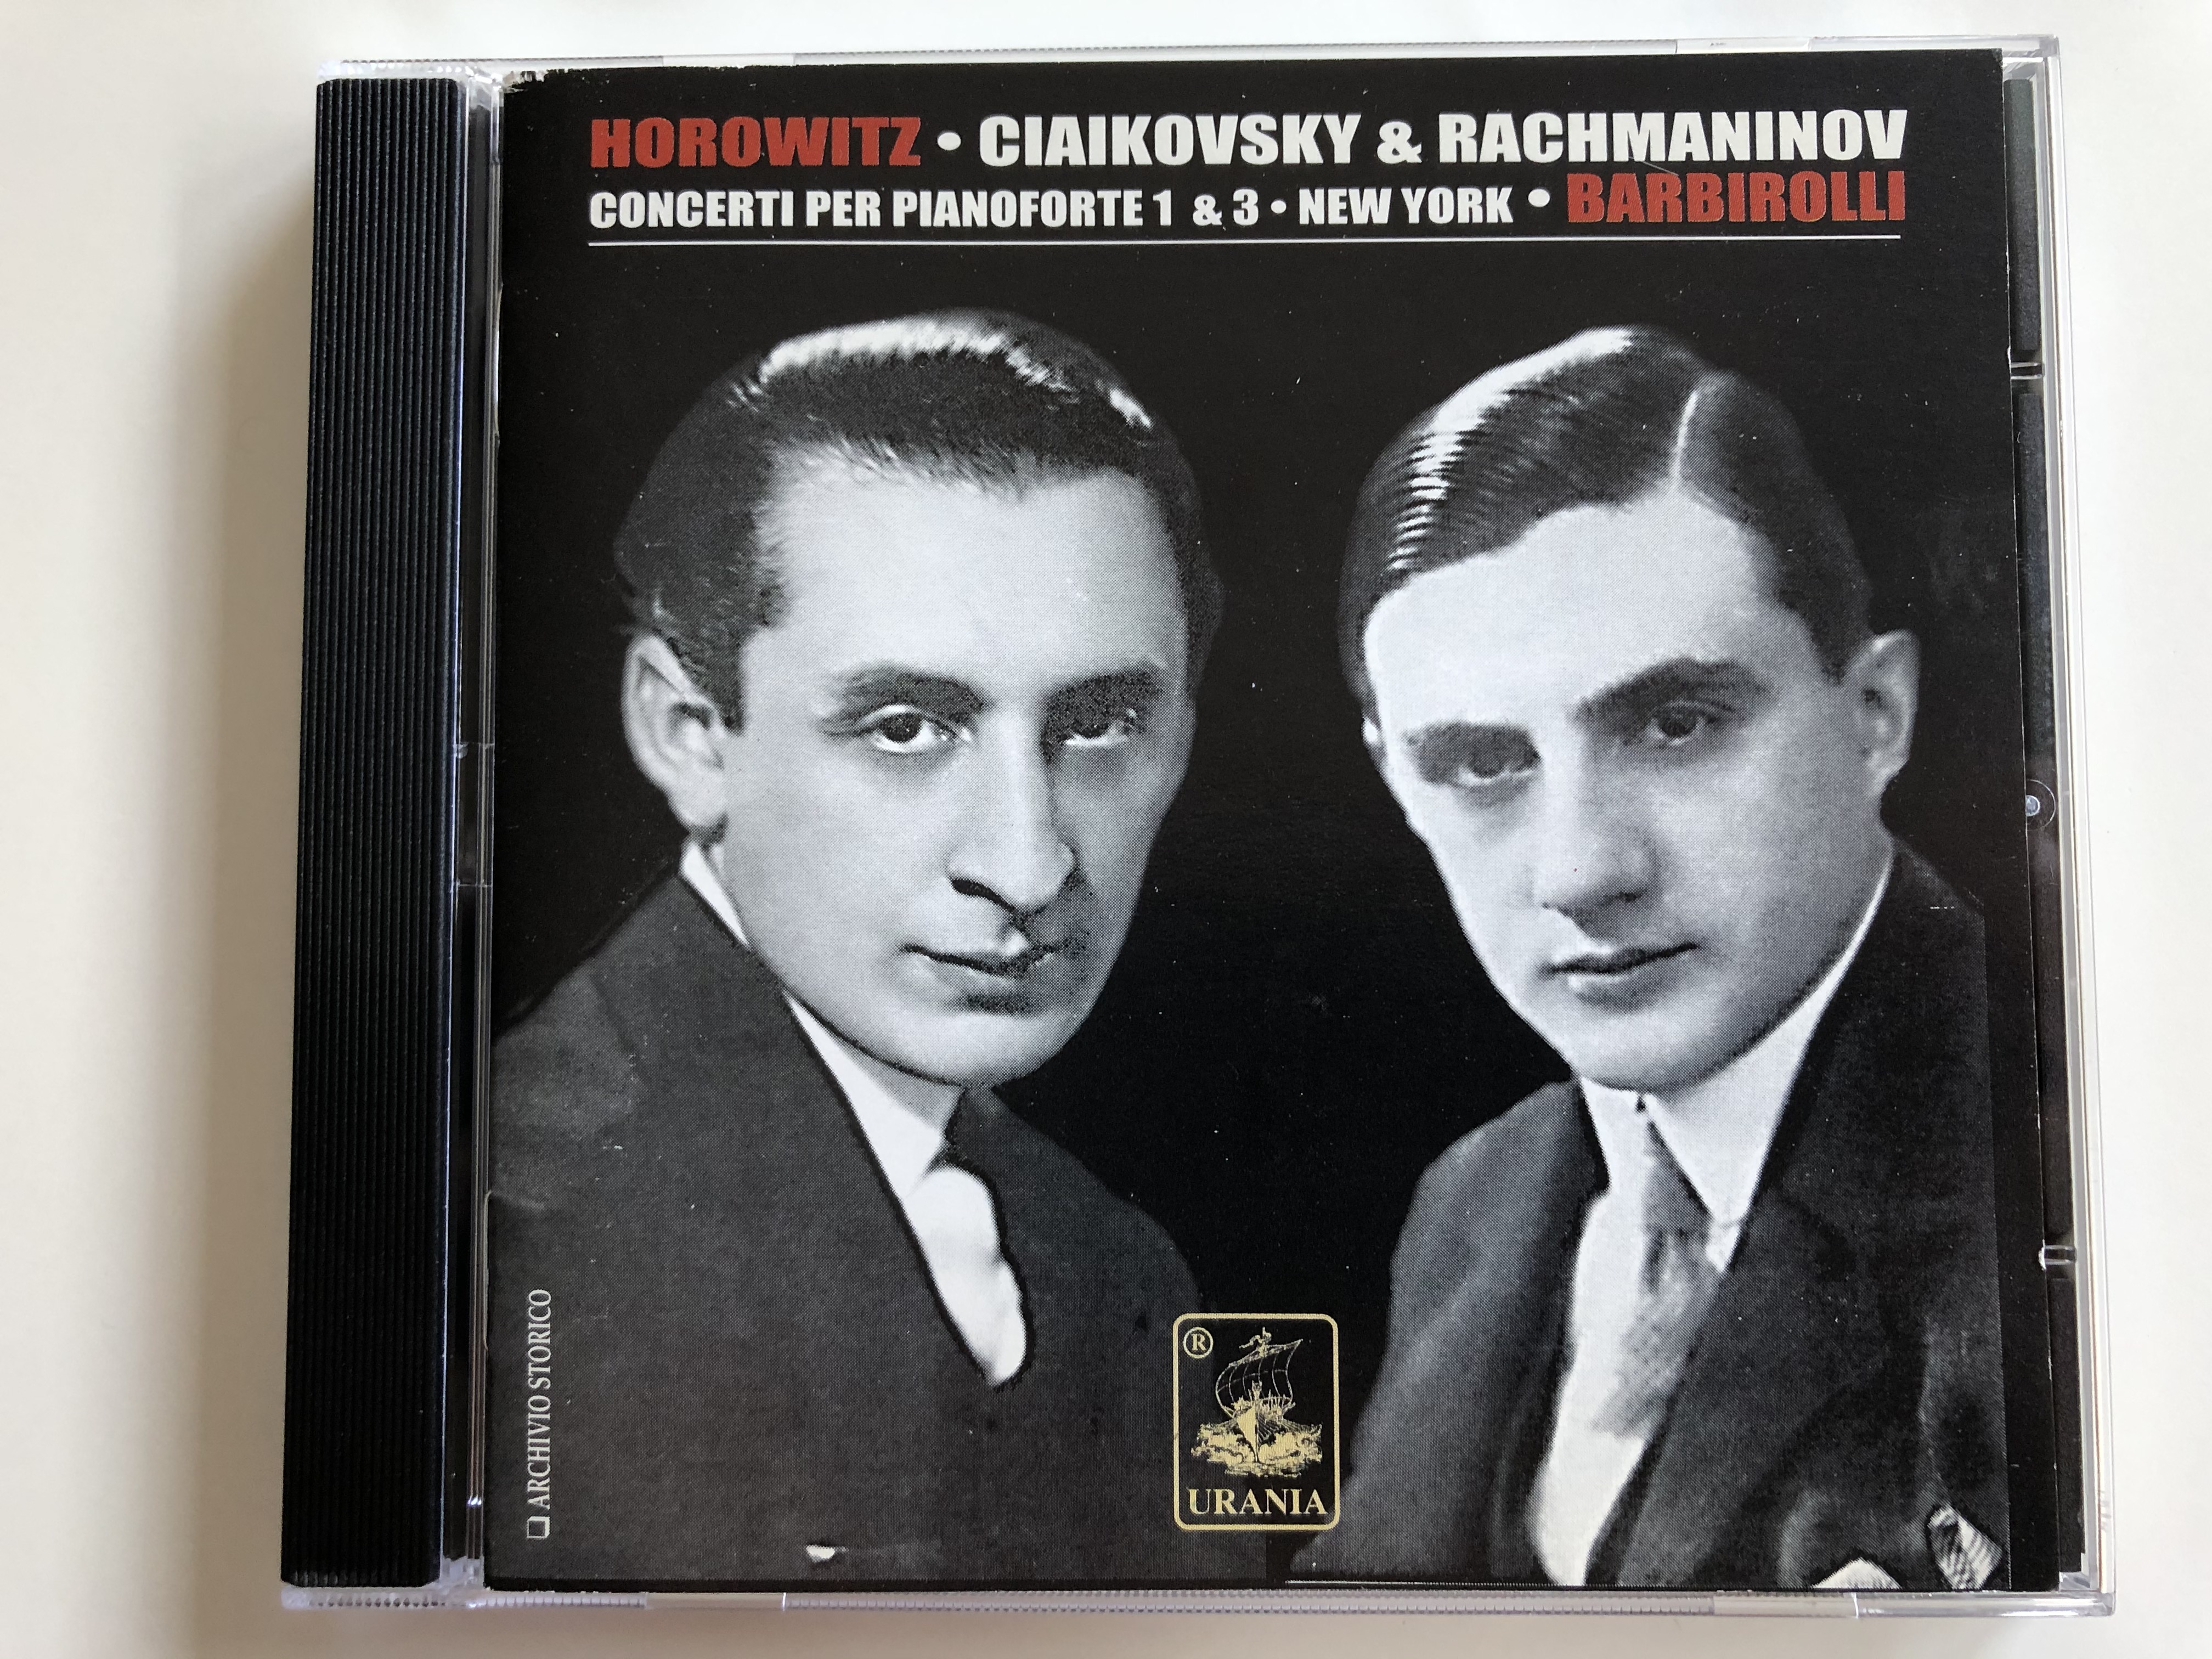 horowitz-ciaikovsky-rachmaninov-concerti-per-pianoforte-1-3-new-york-barbirolli-urania-audio-cd-2000-urn-22-1-.jpg